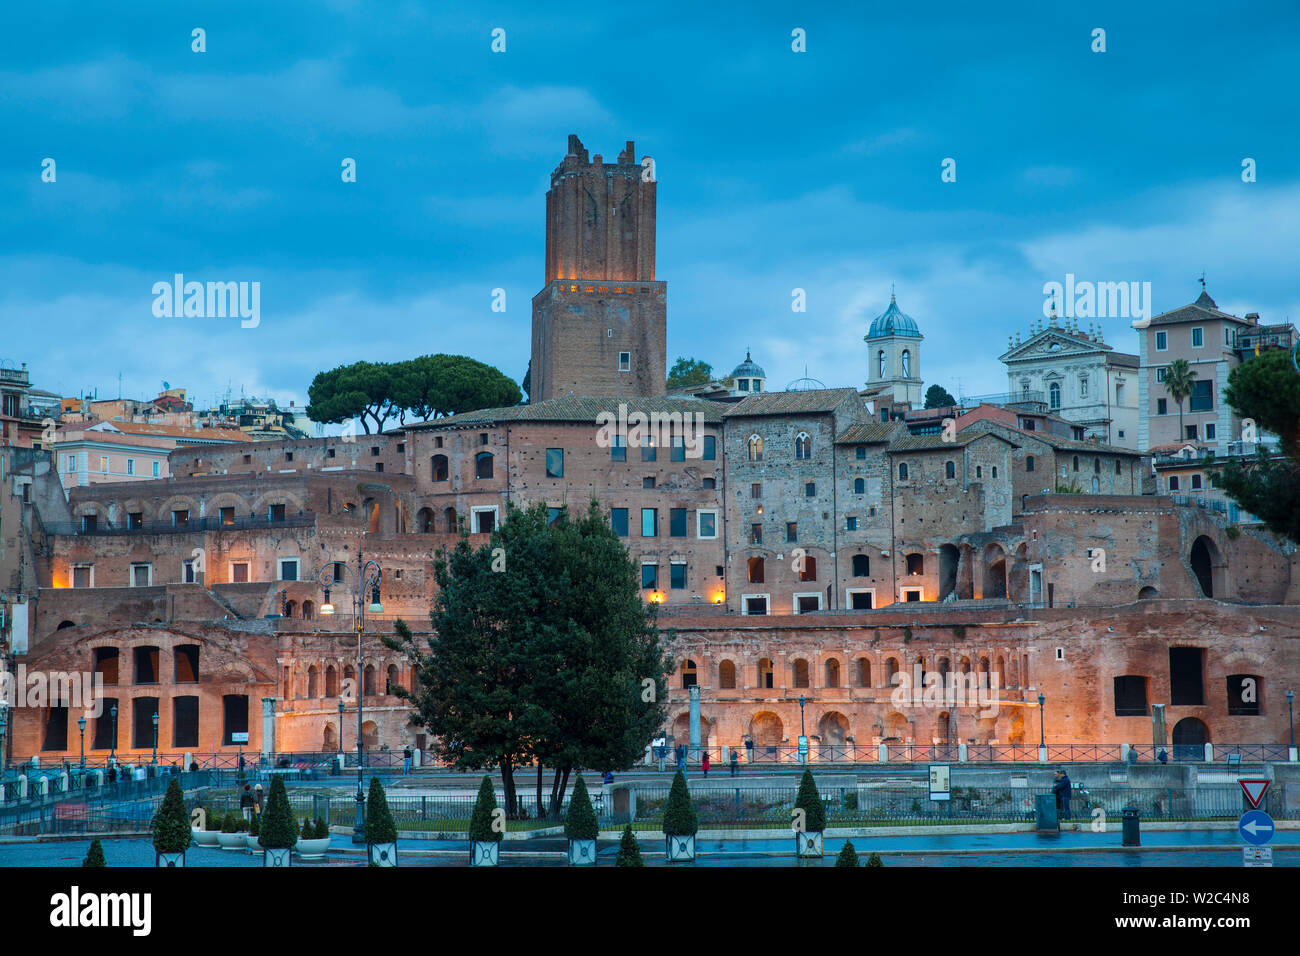 Italien, Latium, Rom, Ansicht von Mercati di Traiano - der Trajan Markt Stockfoto